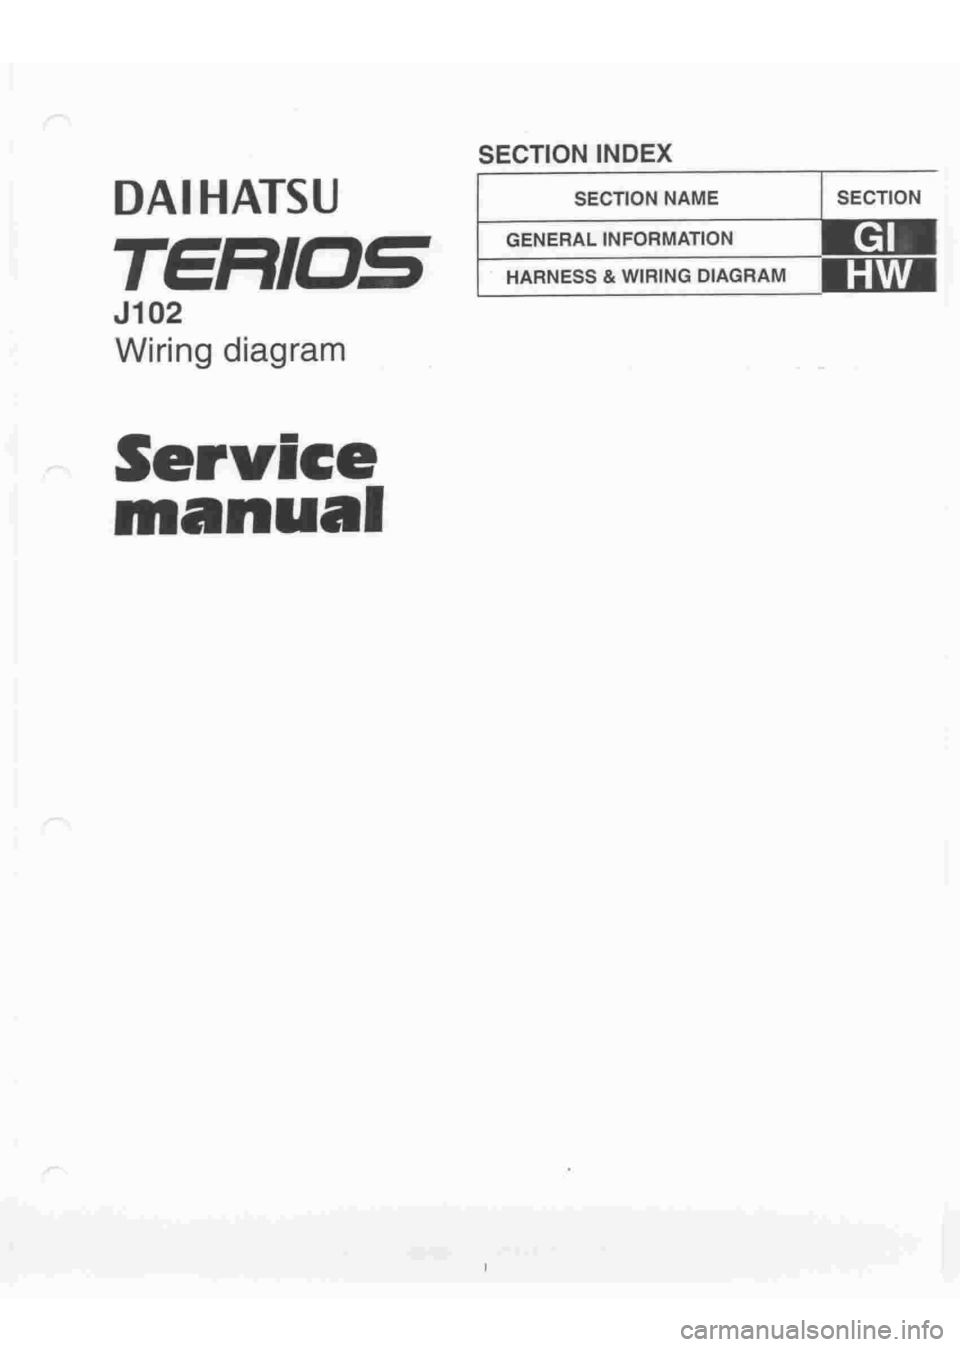 DAIHATSU TERIOS 2000  Service Repair Manual 
 
www.WorkshopManuals.co.uk

 
Purchased from www.WorkshopManuals.co.uk 